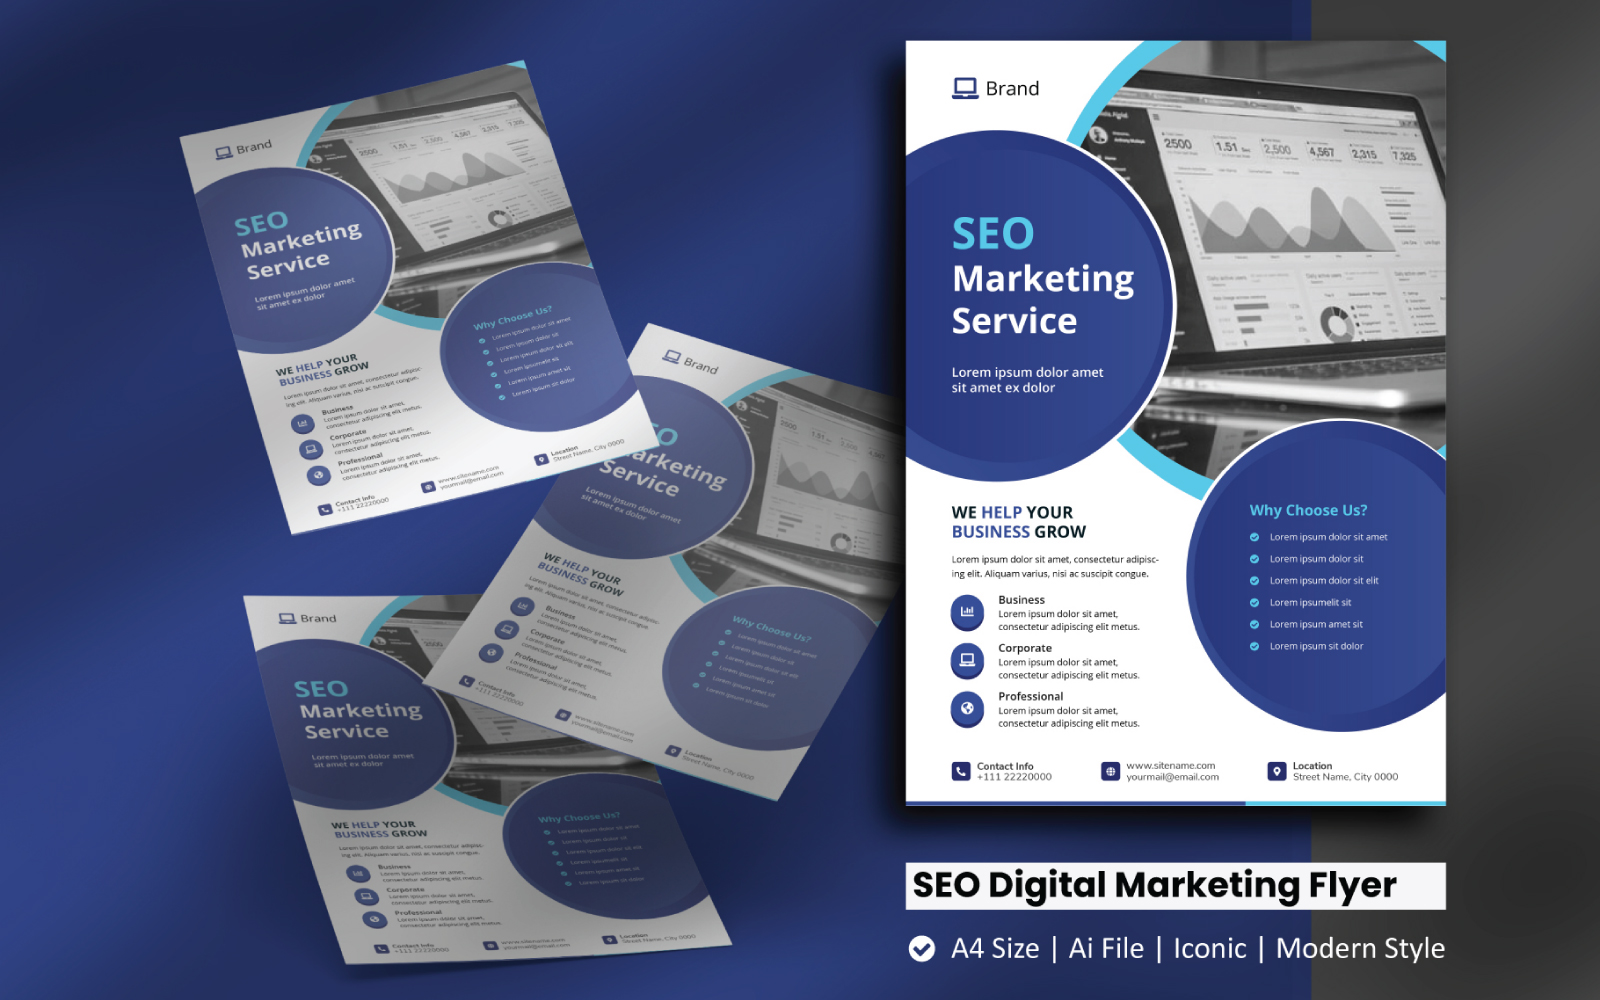 SEO Digital Marketing Flyer Corporate Identity Template